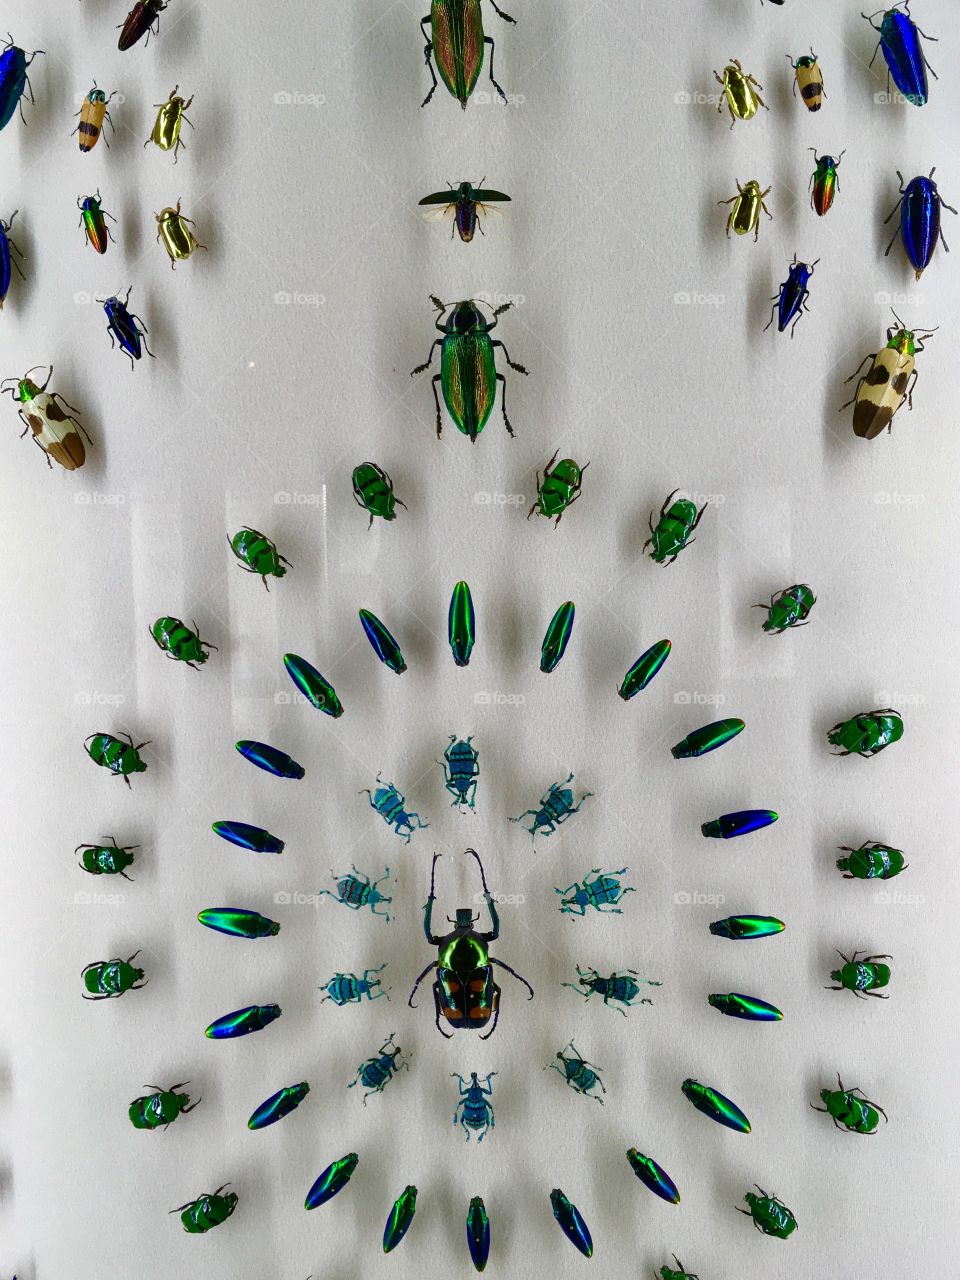 Beetle display @ insectarium 